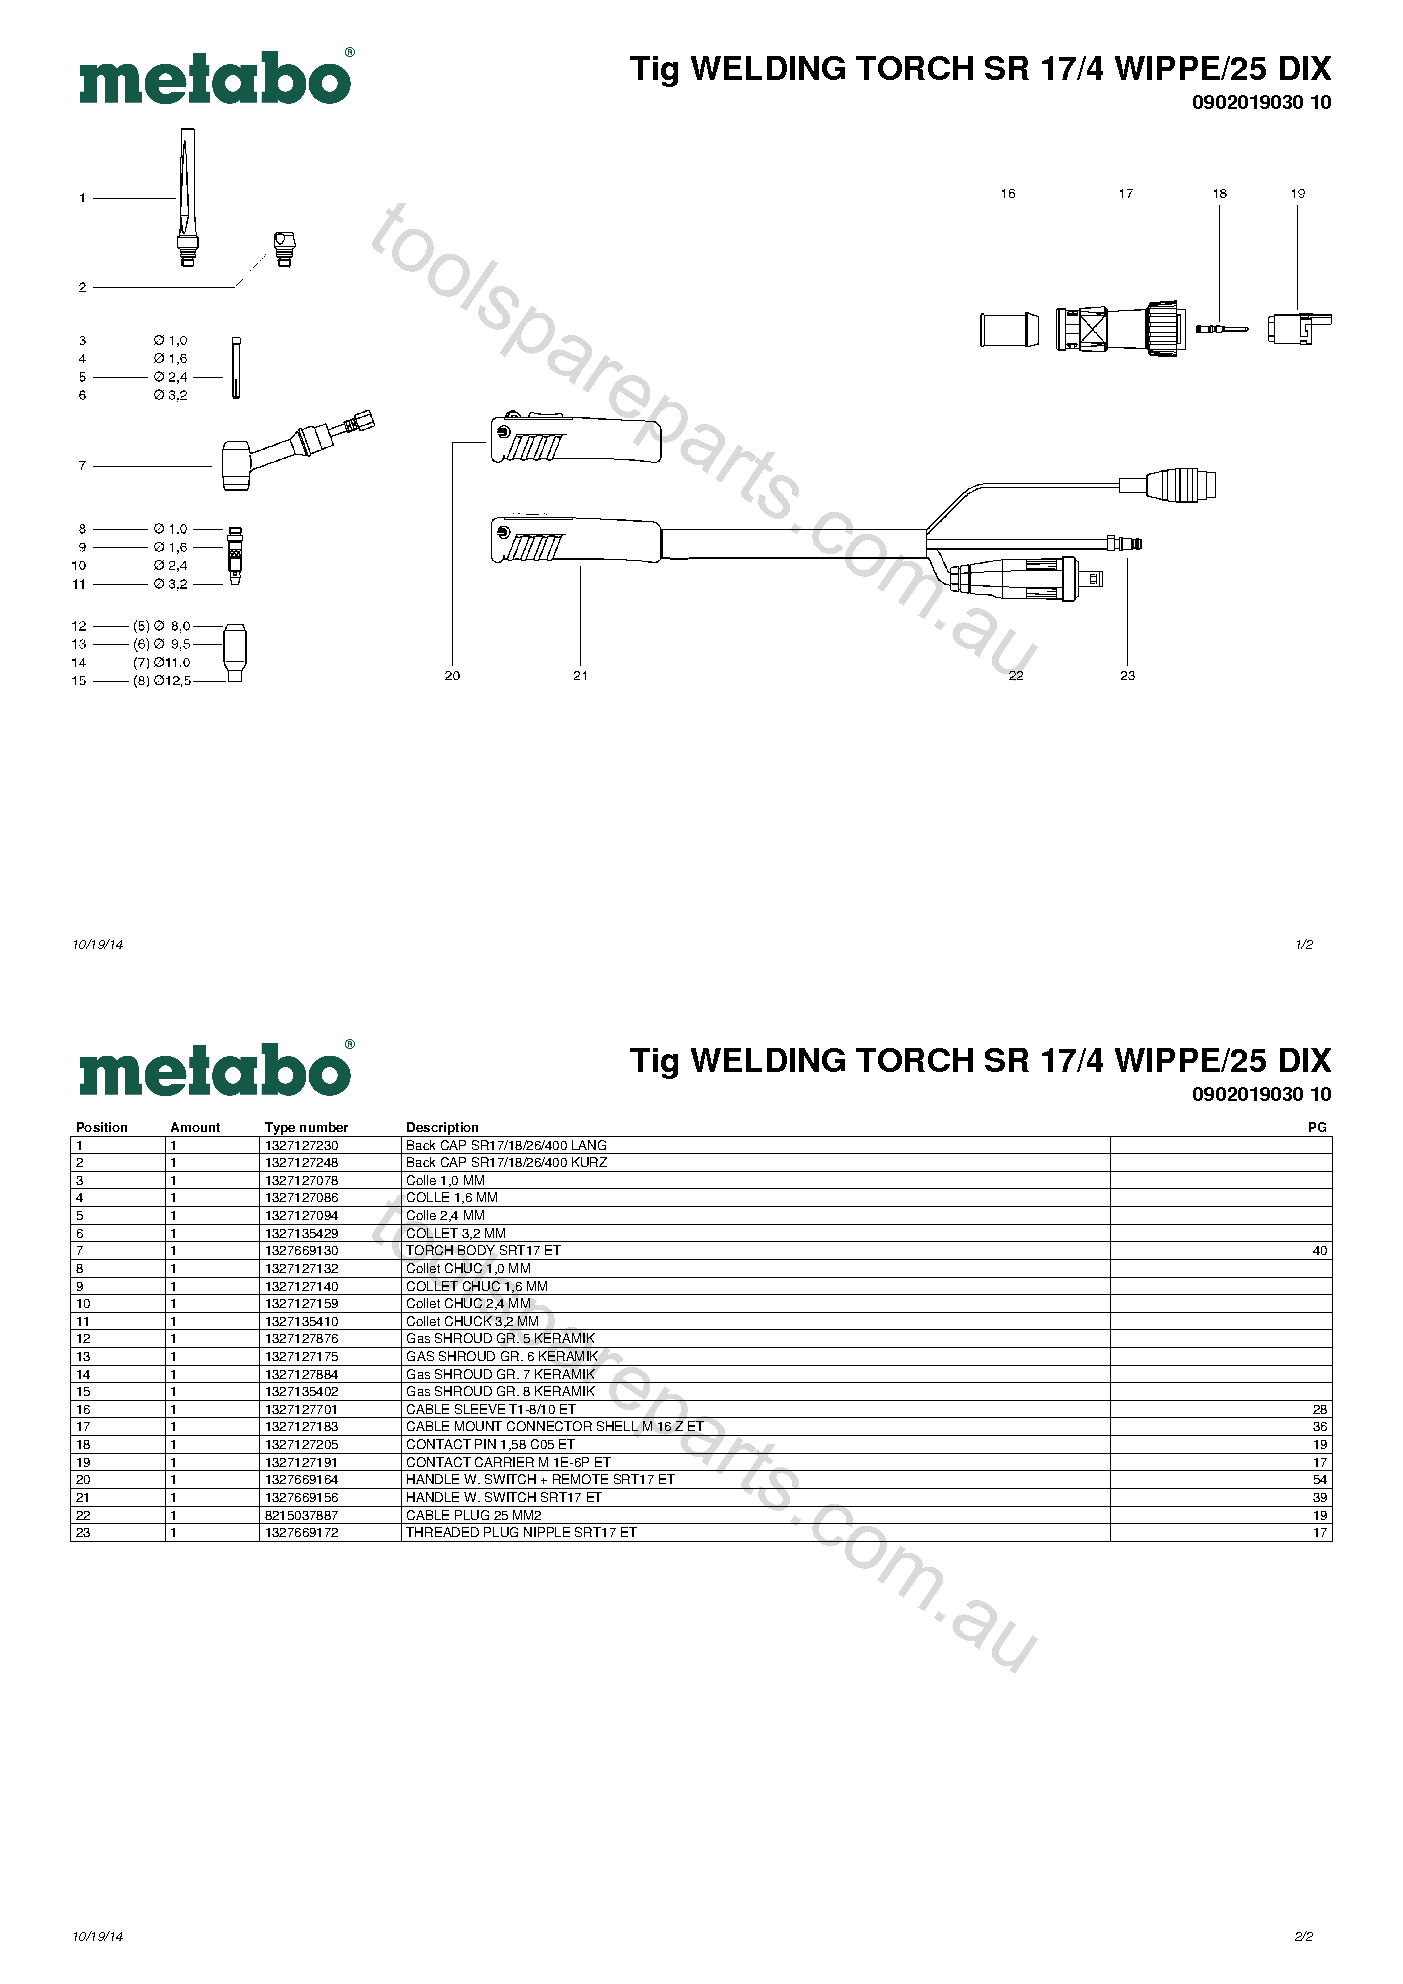 Metabo Tig WELDING TORCH SR 17/4 WIPPE/25 DIX 0902019030 10  Diagram 1